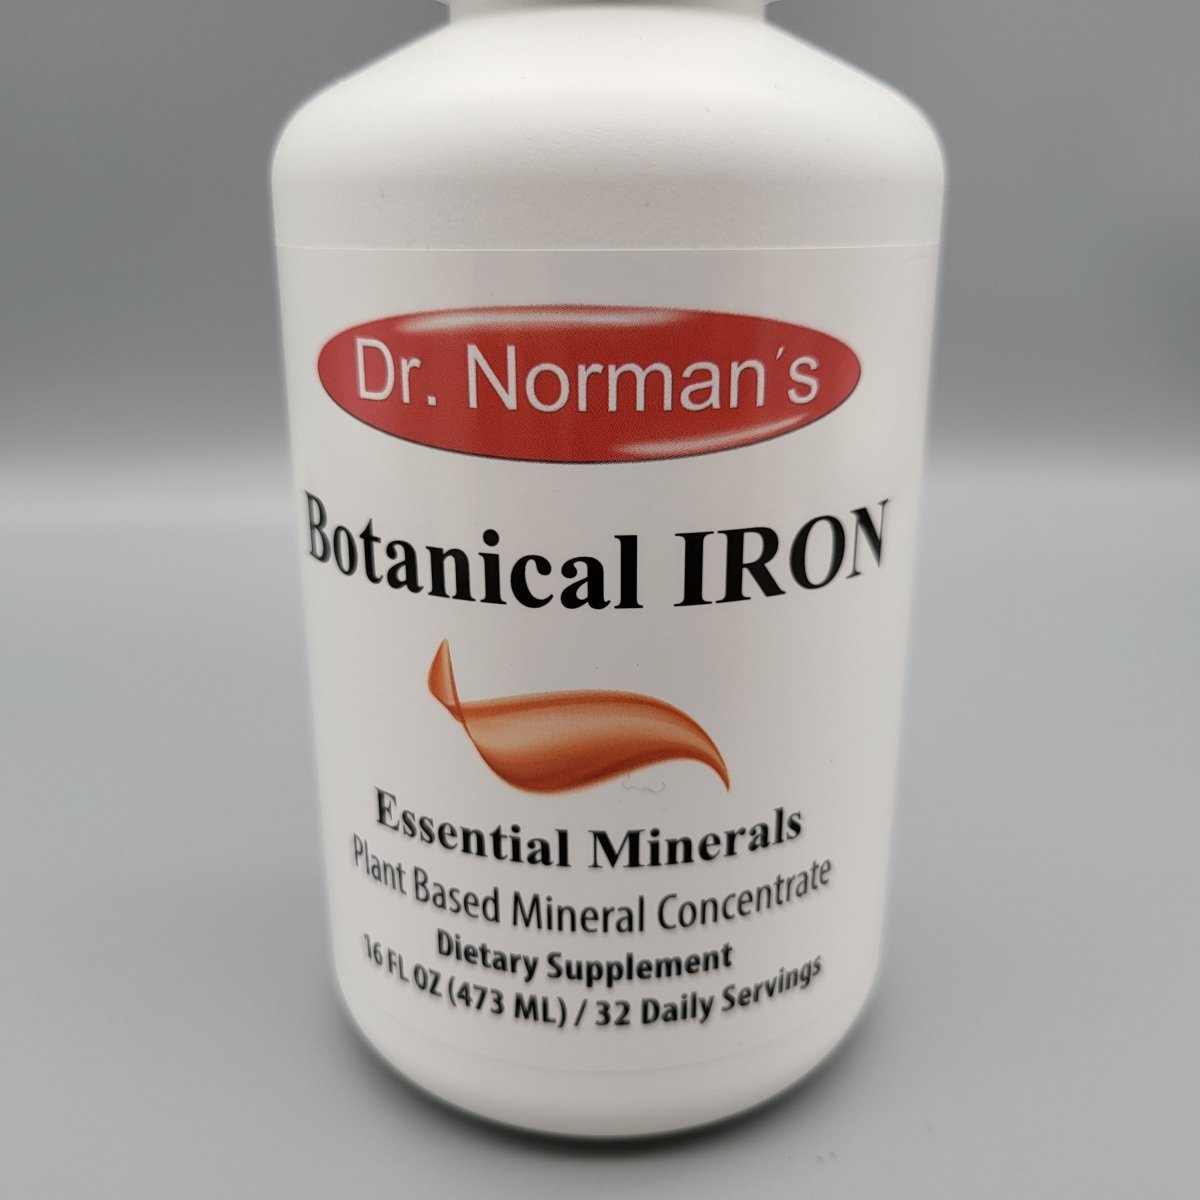 DR. NORMAN'S ESSENTIAL MINERALS - BOTANICAL IRON (16 OZ)